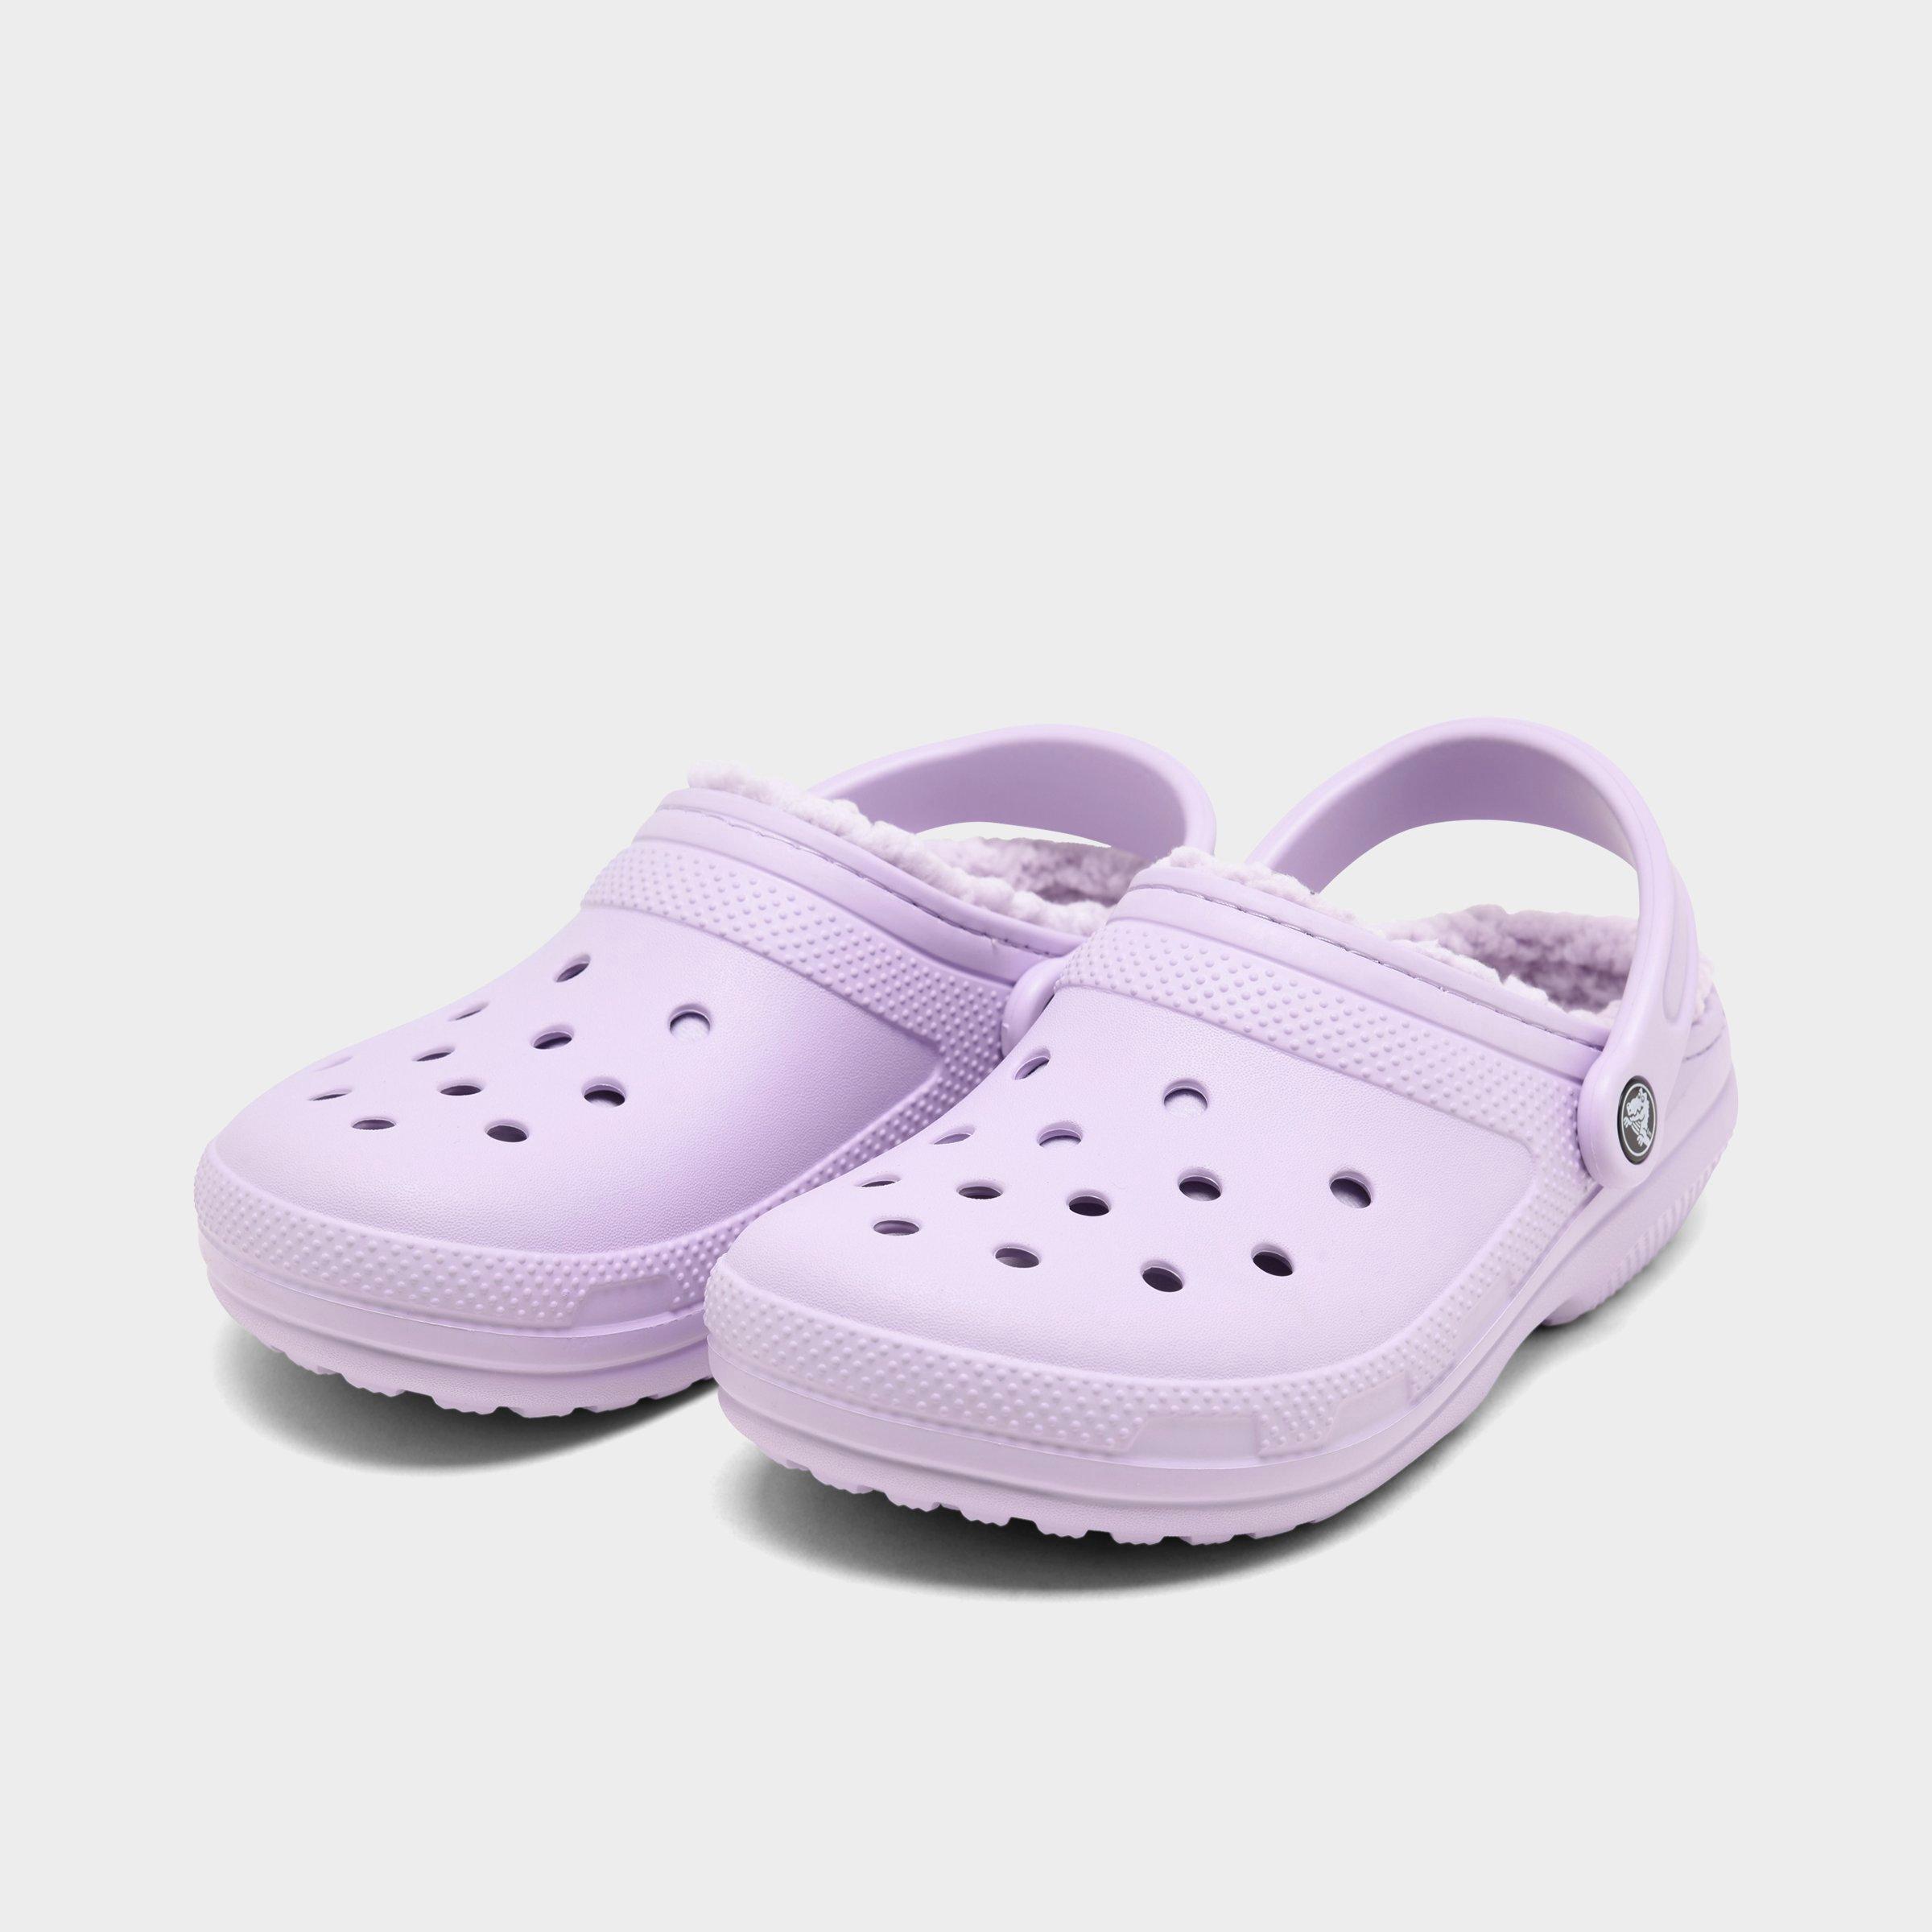 fuzzy crocs lavender